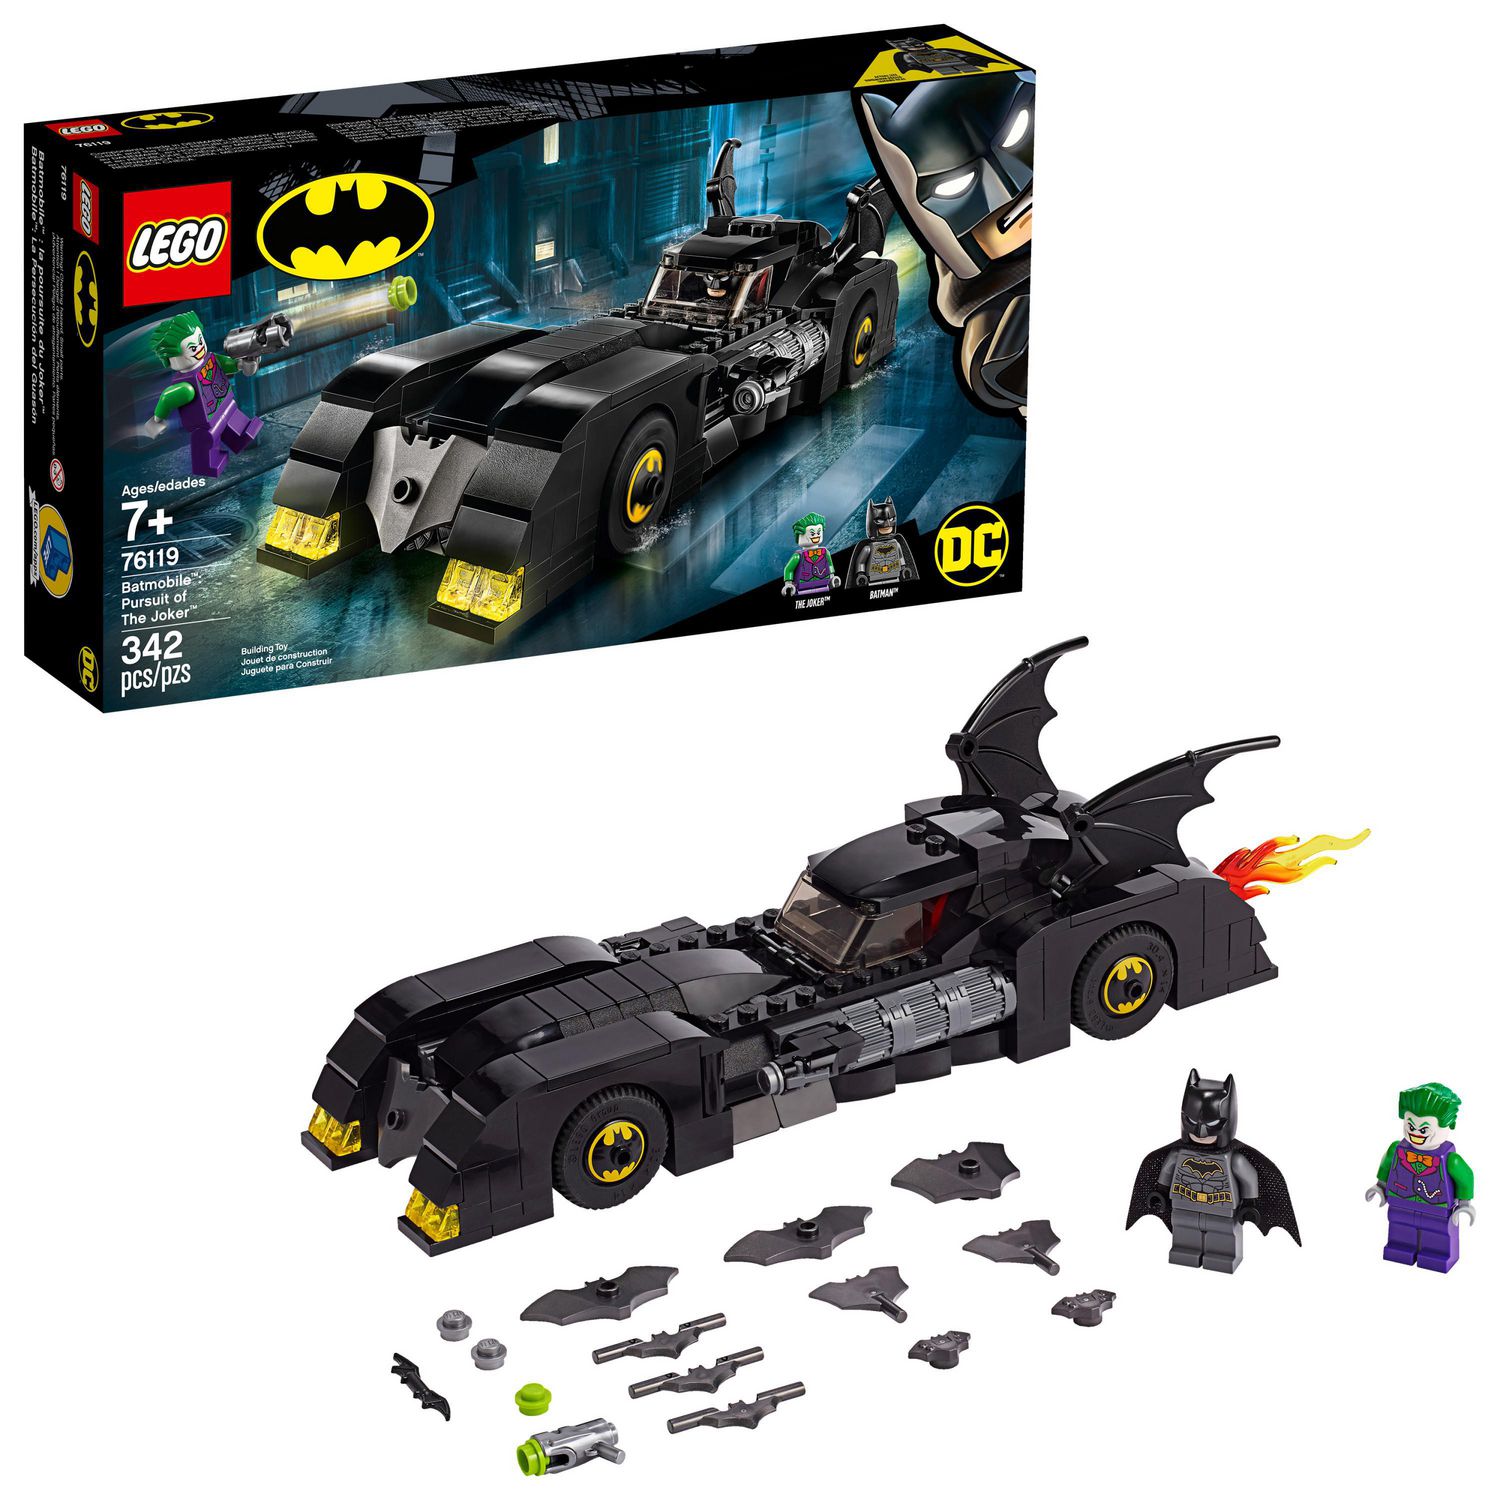 LEGO DC Batman Batmobile: Pursuit of The Joker 76119 Toy Building Set |  Walmart Canada